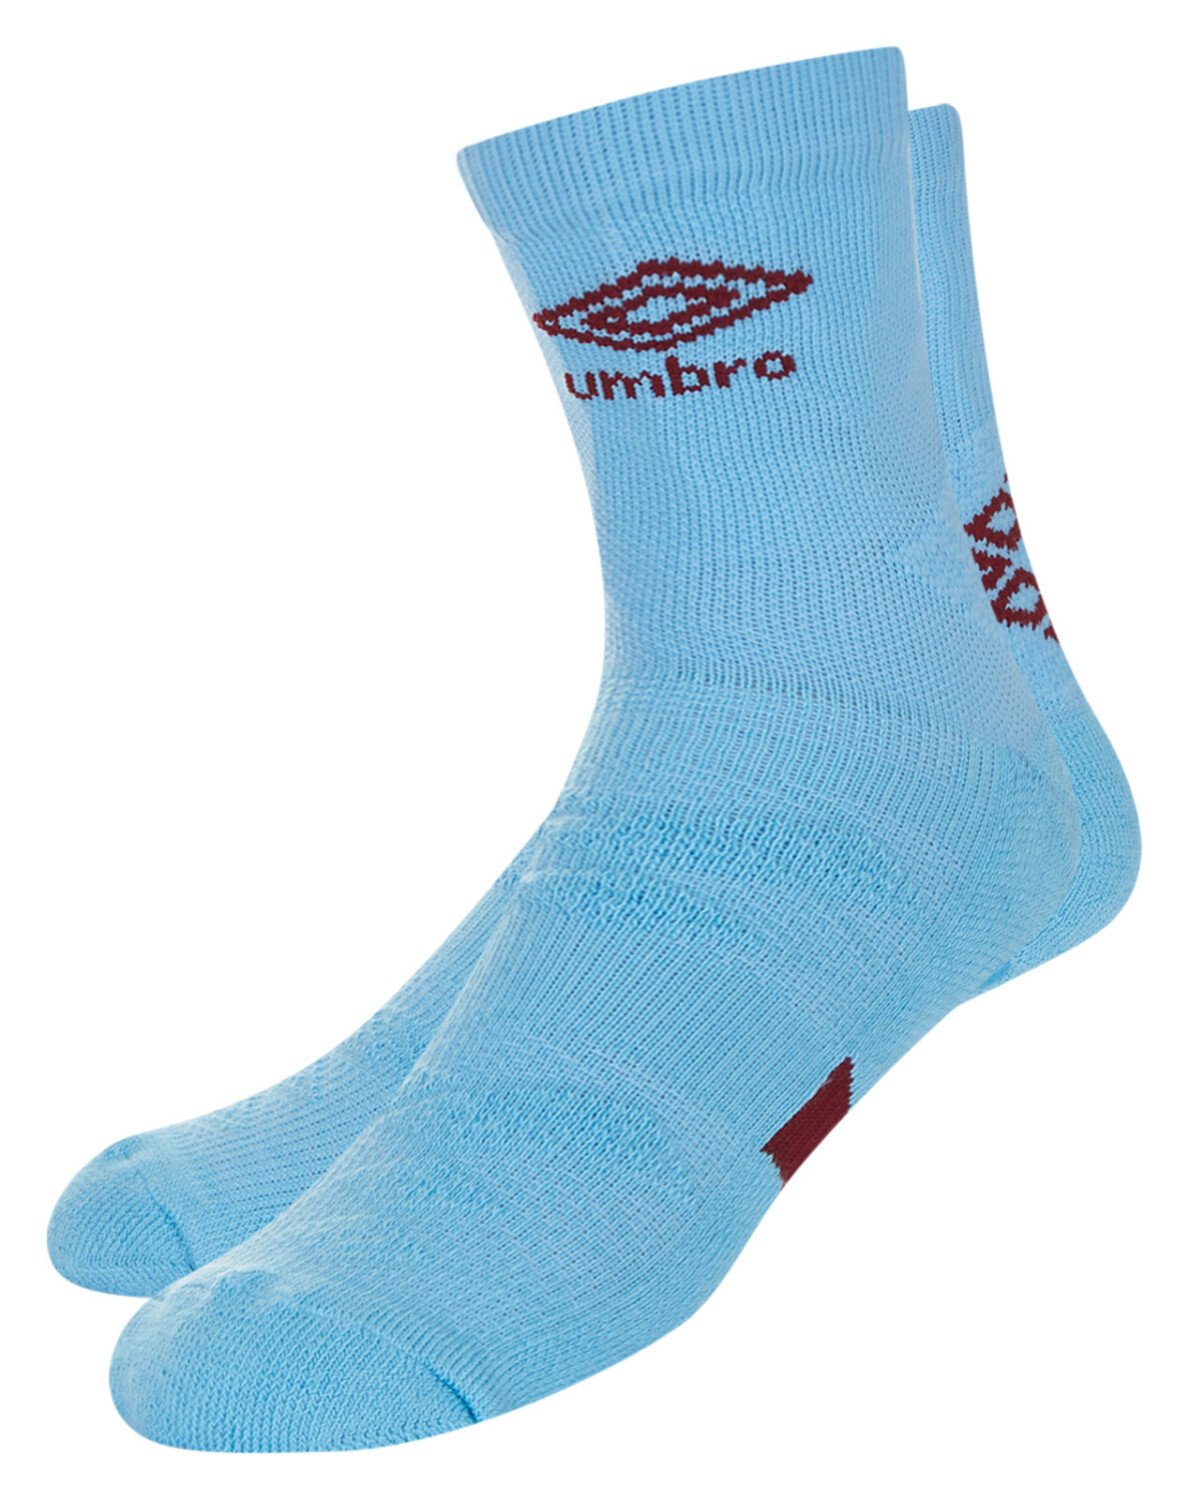 Umbro Protex Grip Sock - Sky / New Claret - Total Football Direct